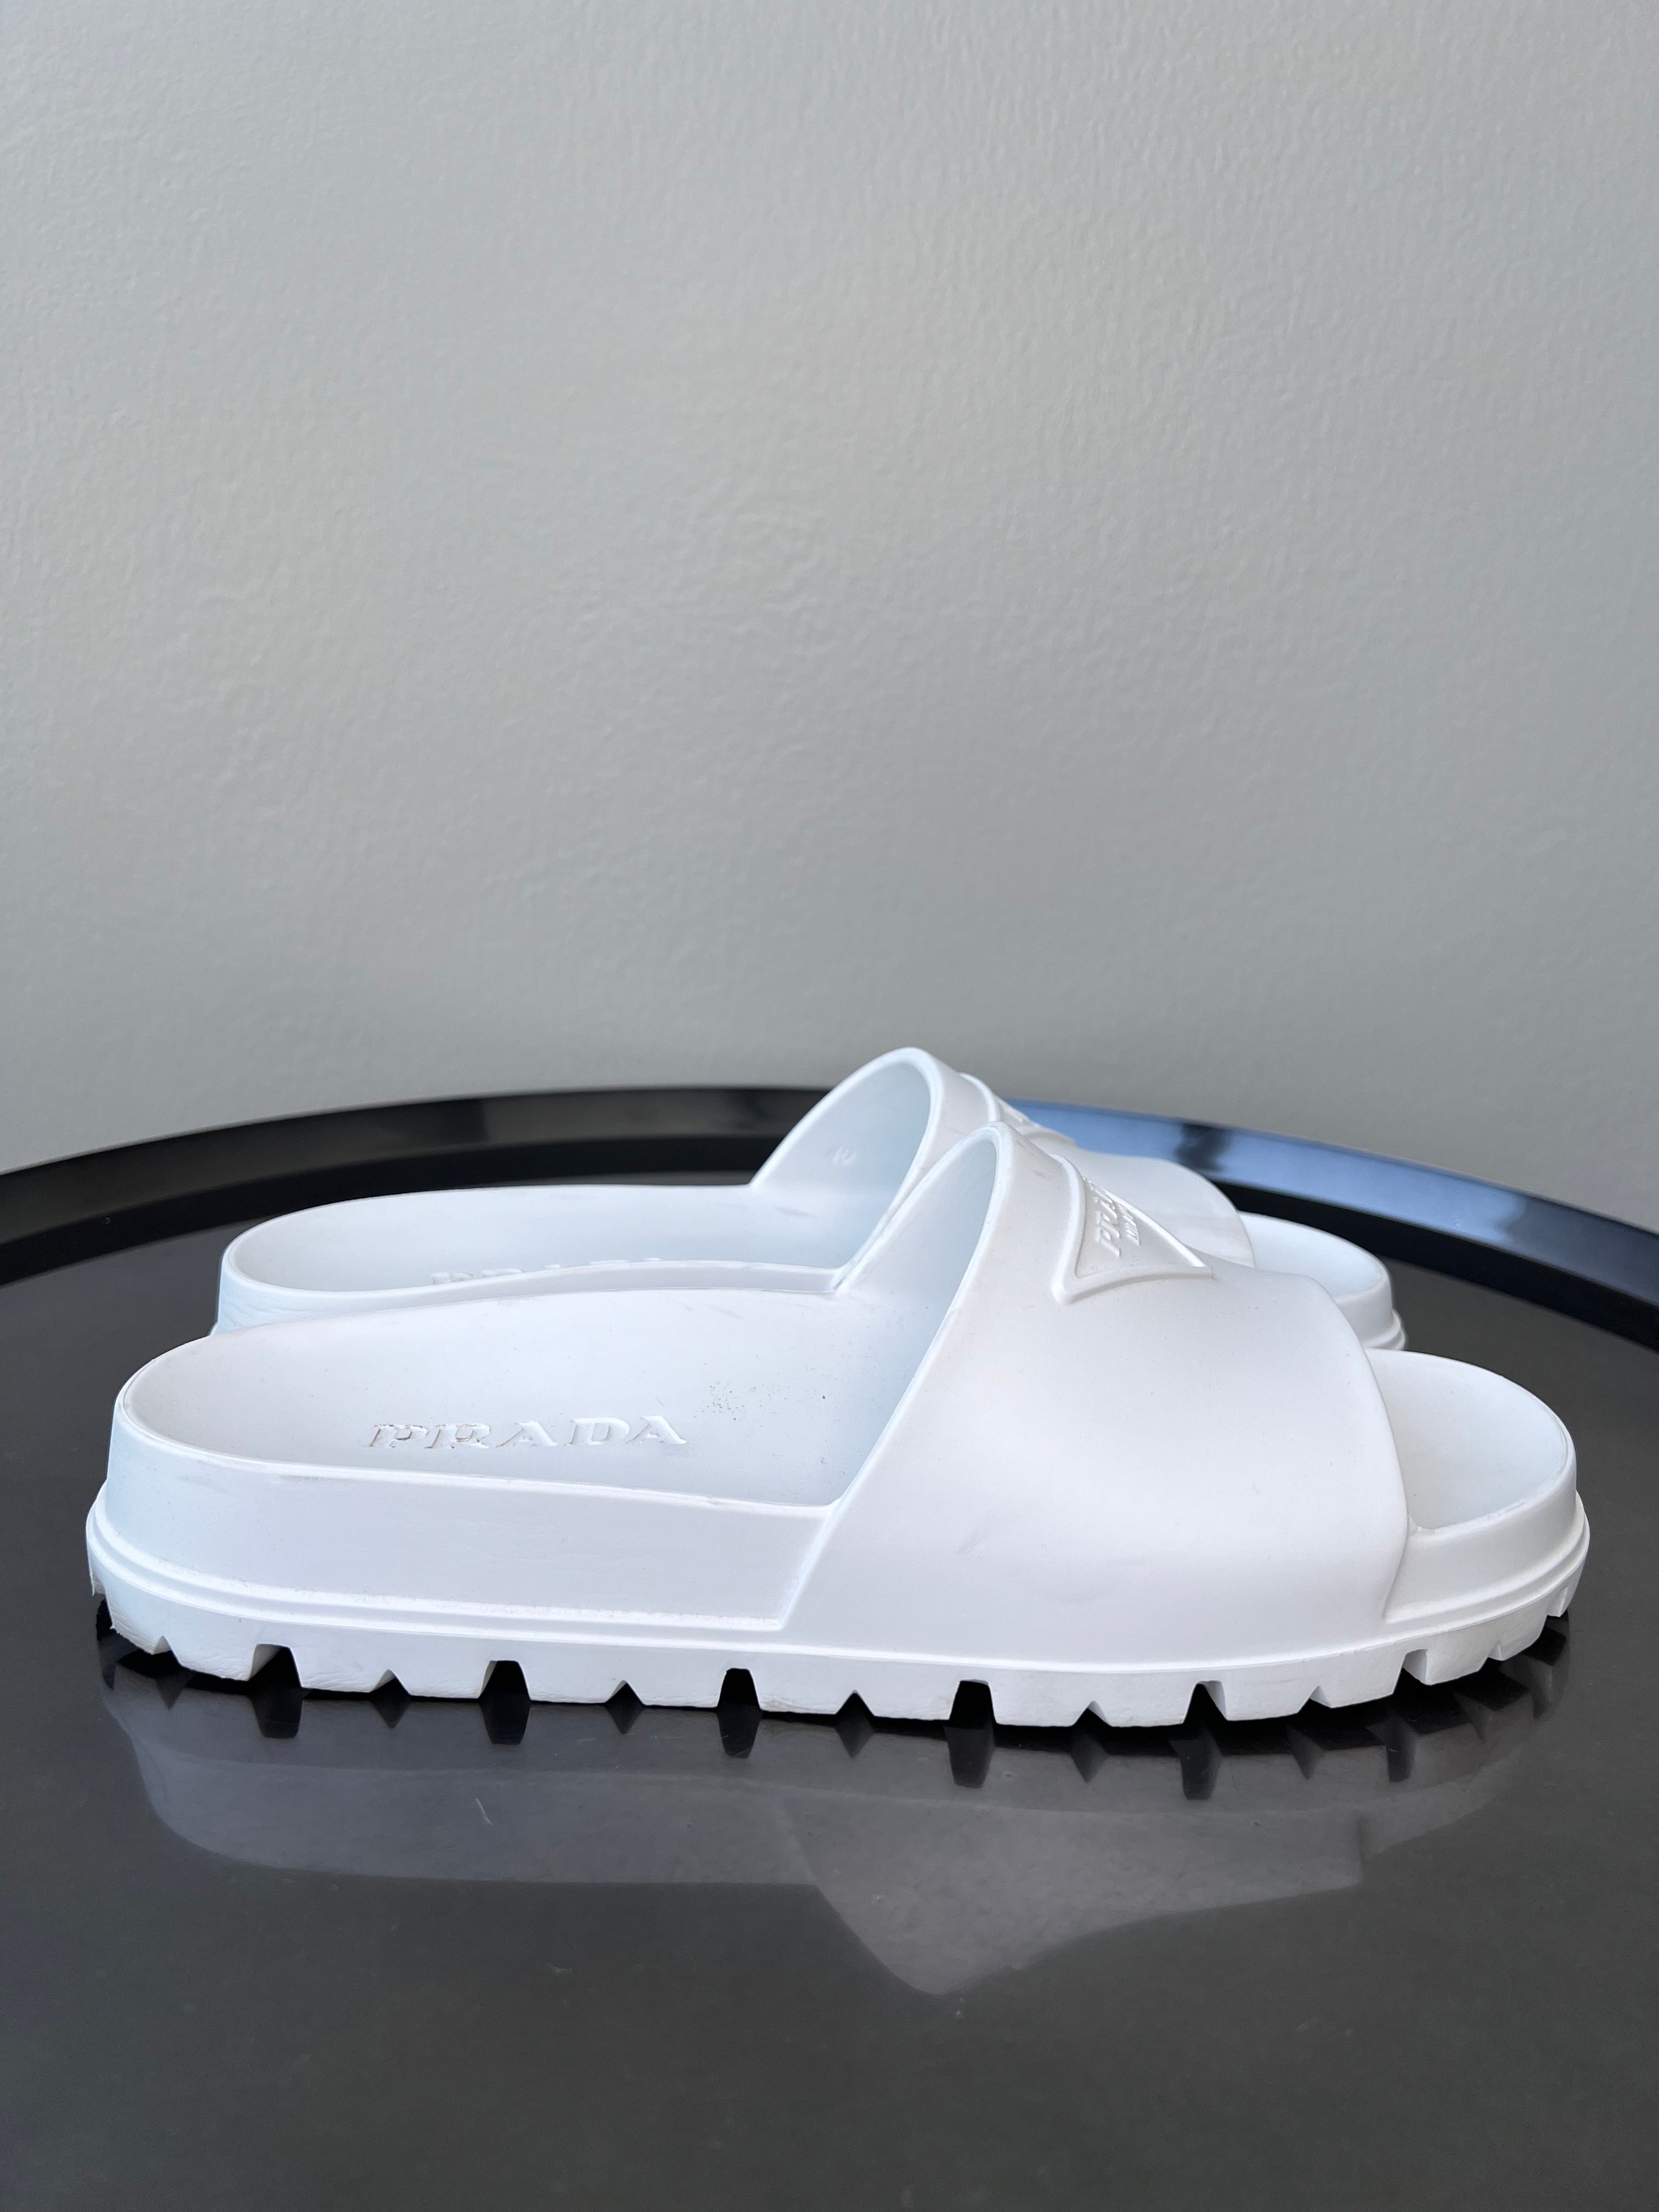 White Plastic Mules Slides with Prada emboss logo - PRADA